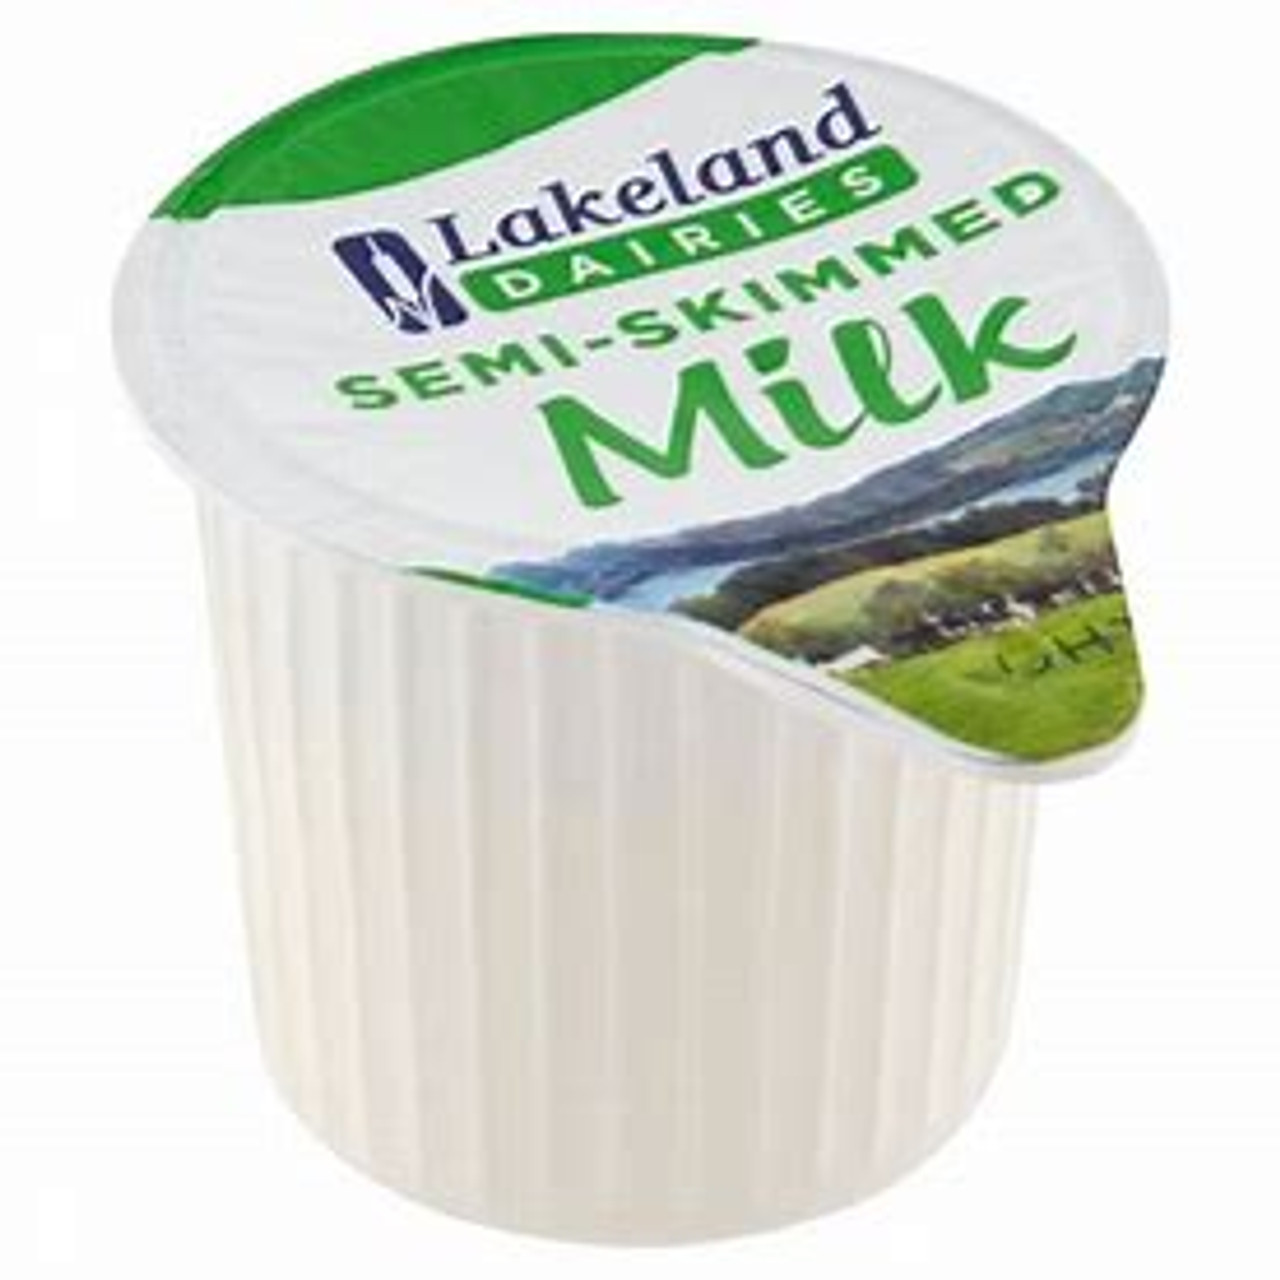 Lakeland Dairies Semi-Skimmed Milk 